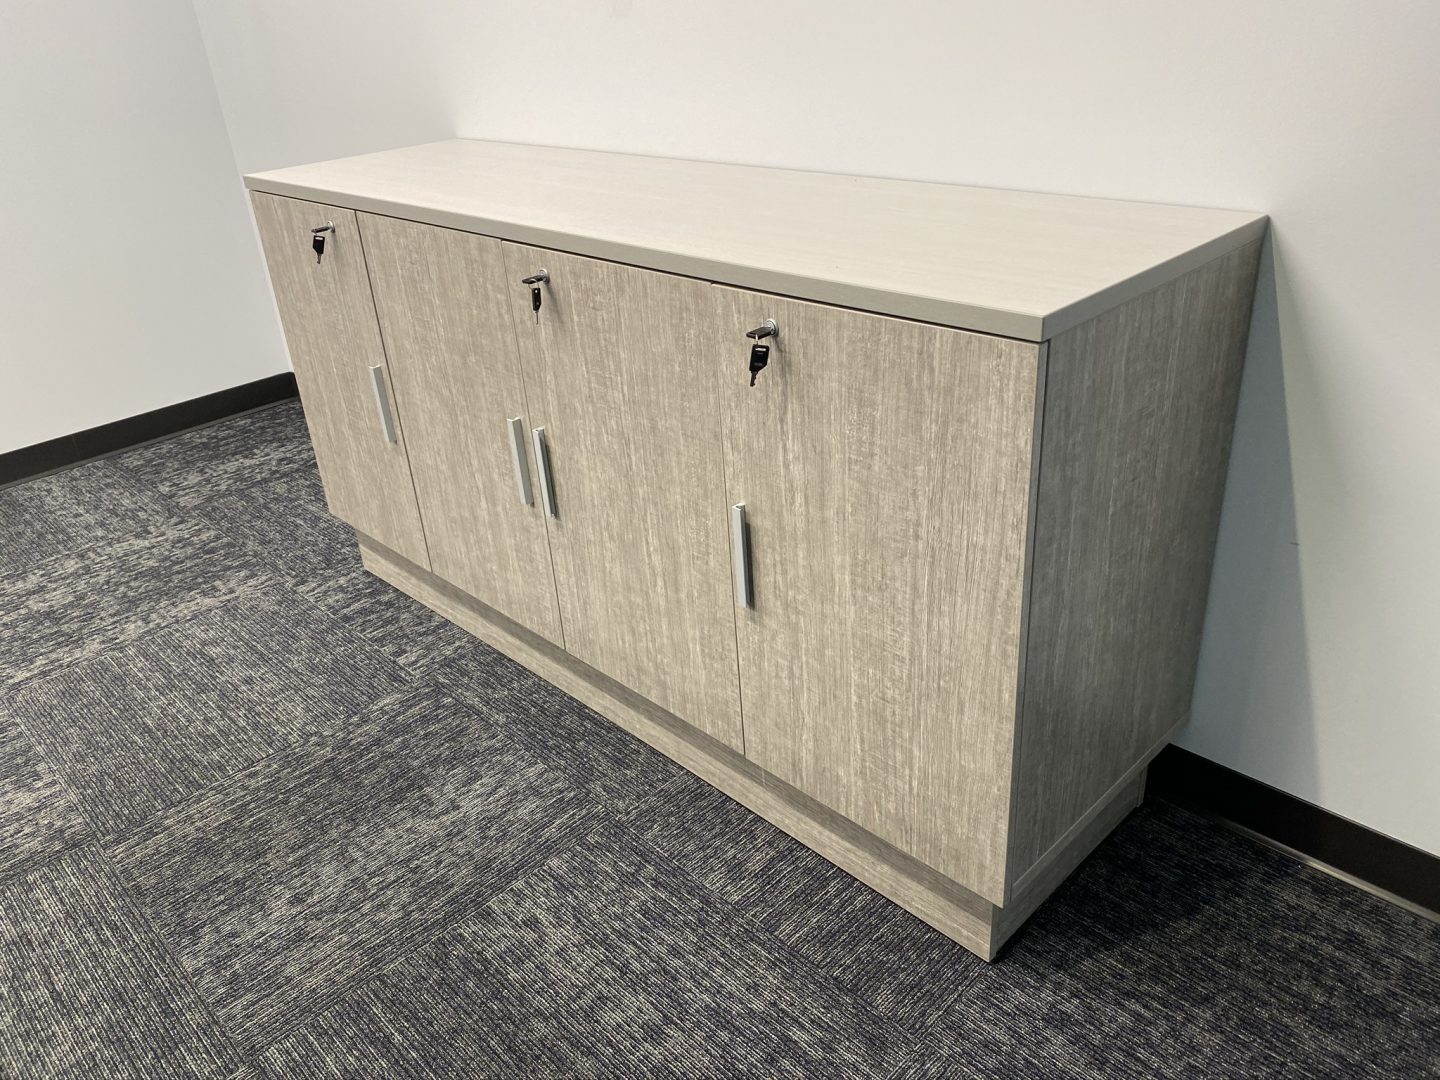 A grey cabinet